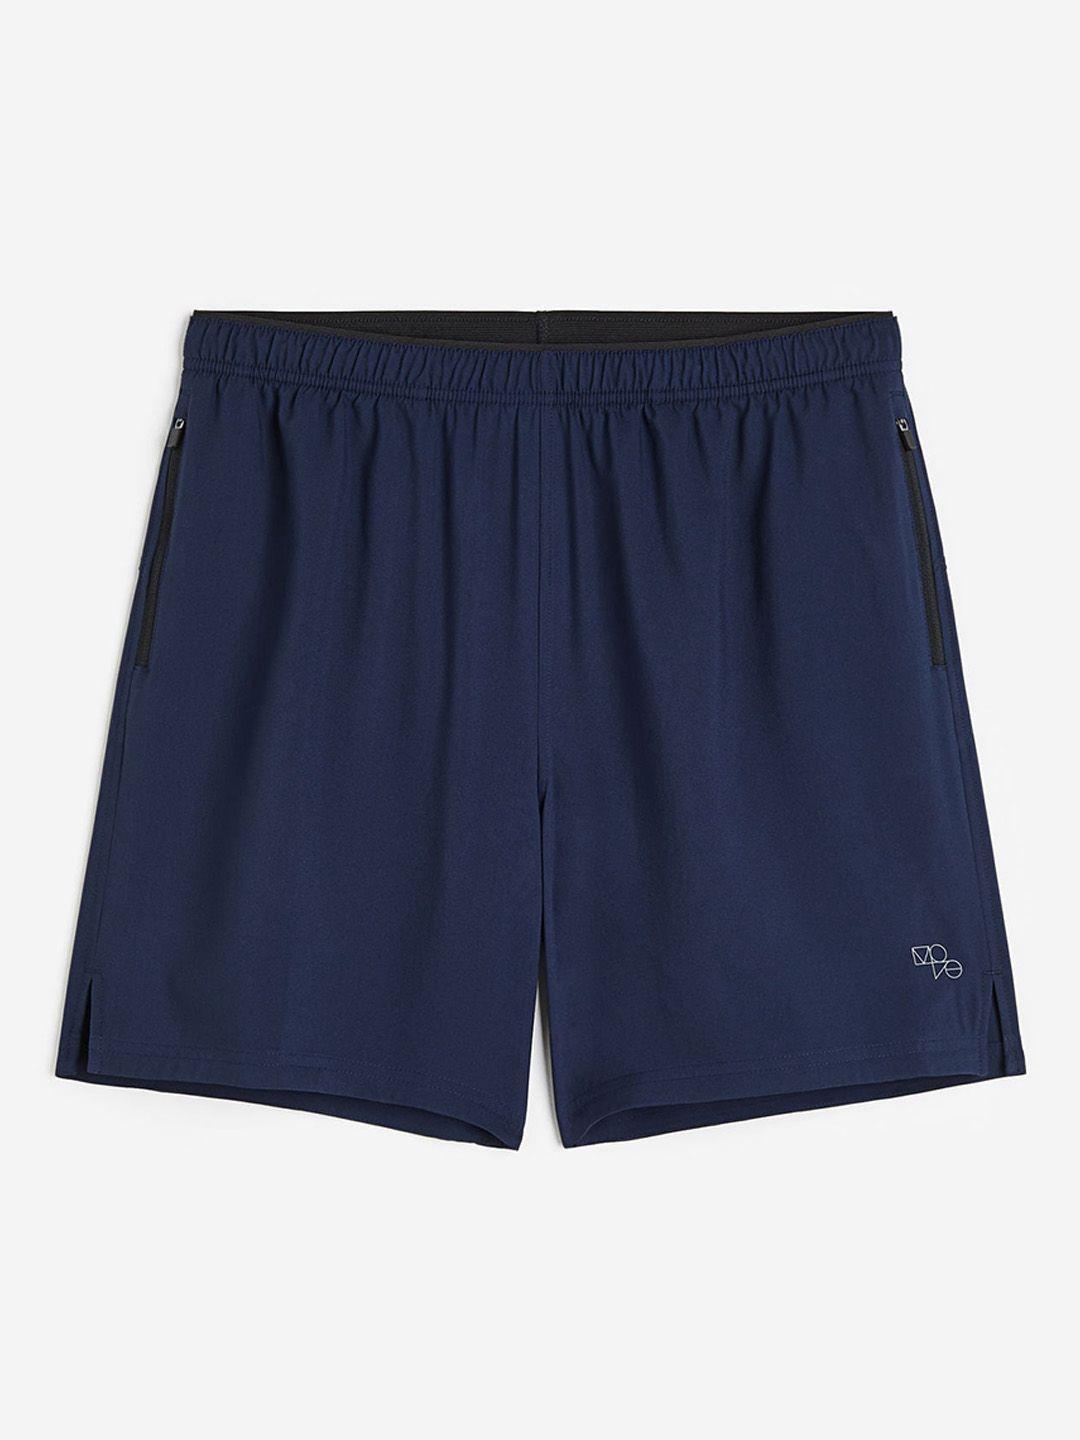 h&m-men-running-shorts